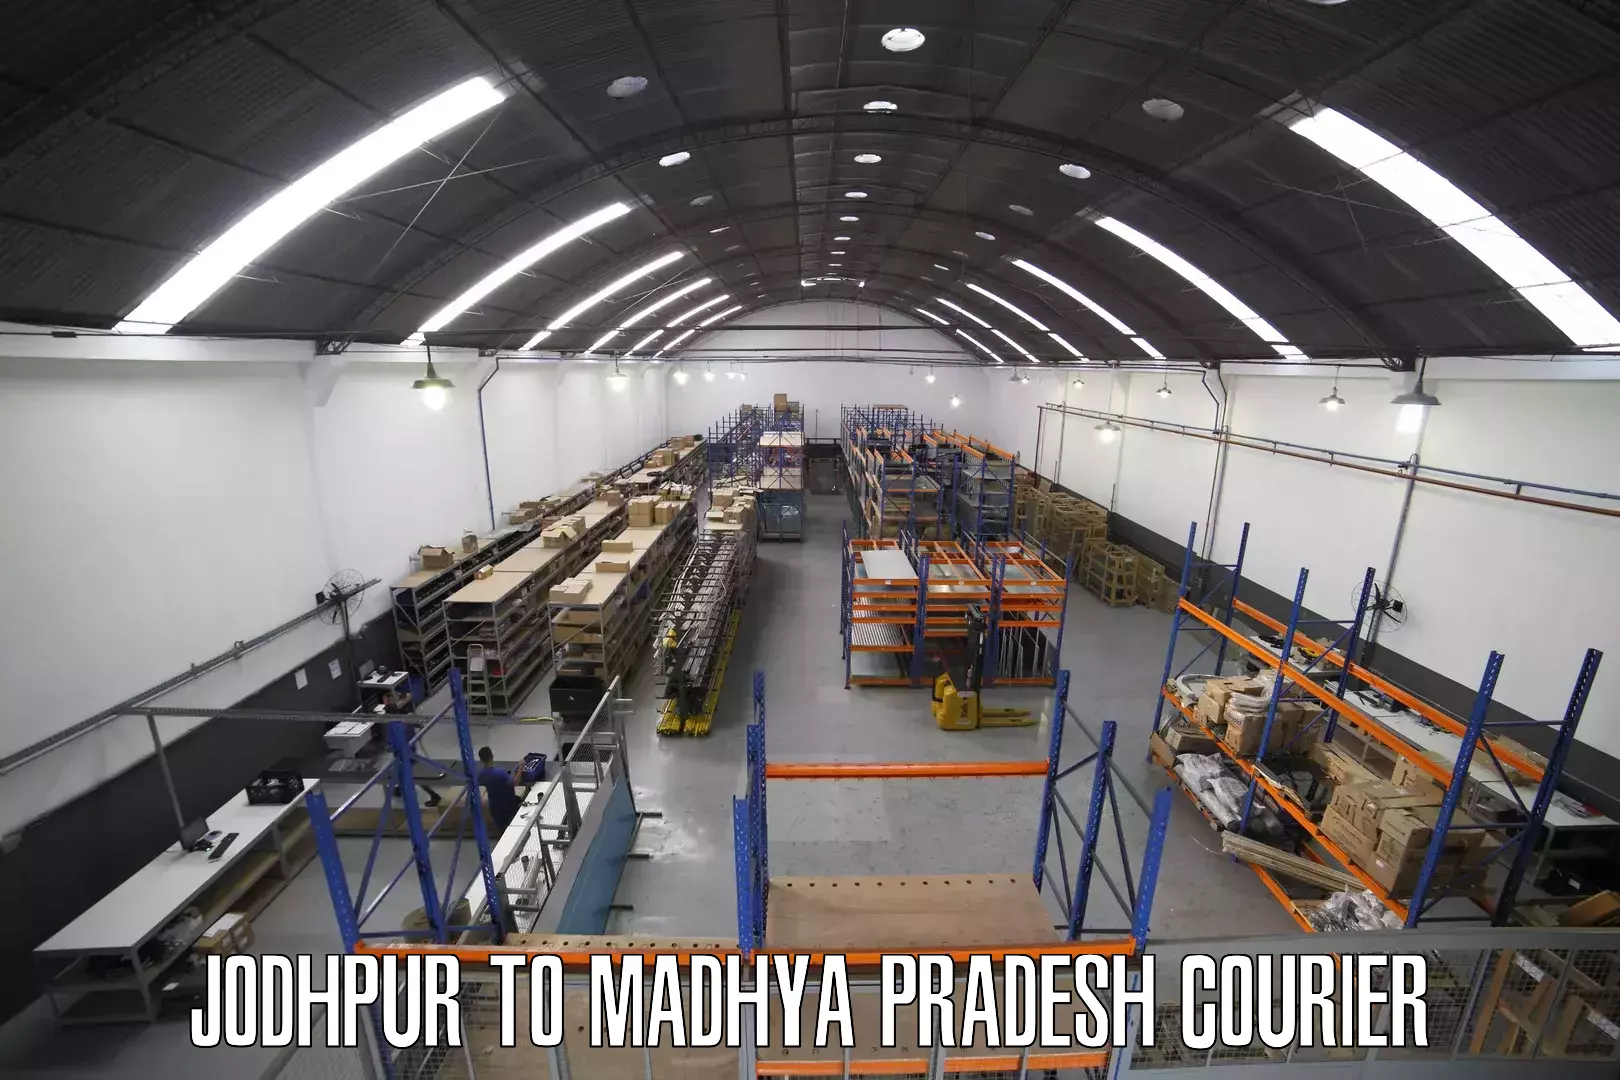 Global logistics network Jodhpur to Maheshwar